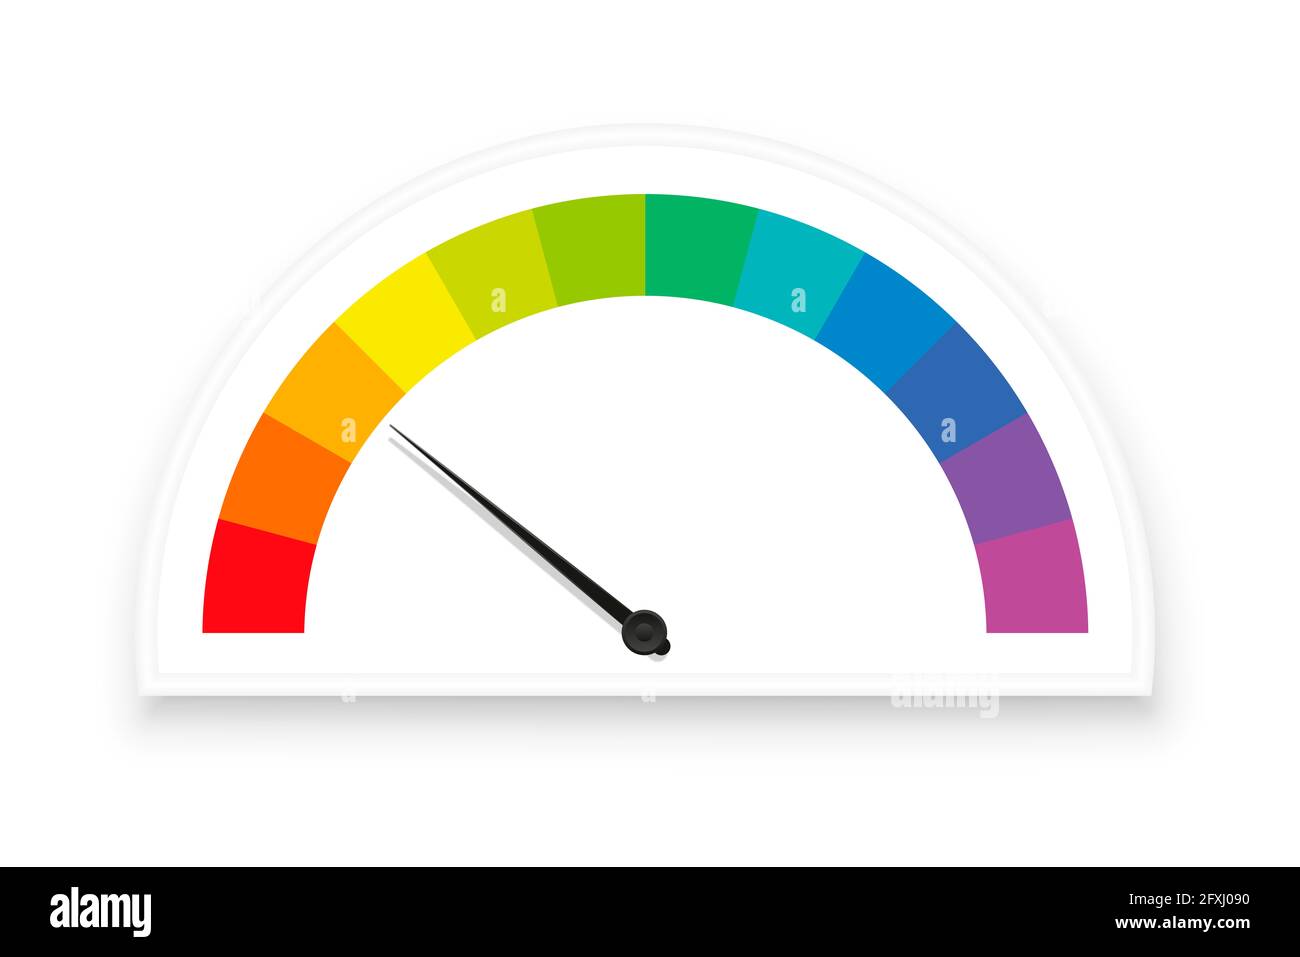 Indicador de color arco iris, velocímetro con coloridos campos de escala, subdivisiones como indicadores de clasificación, indicador de medición con puntero negro. Foto de stock